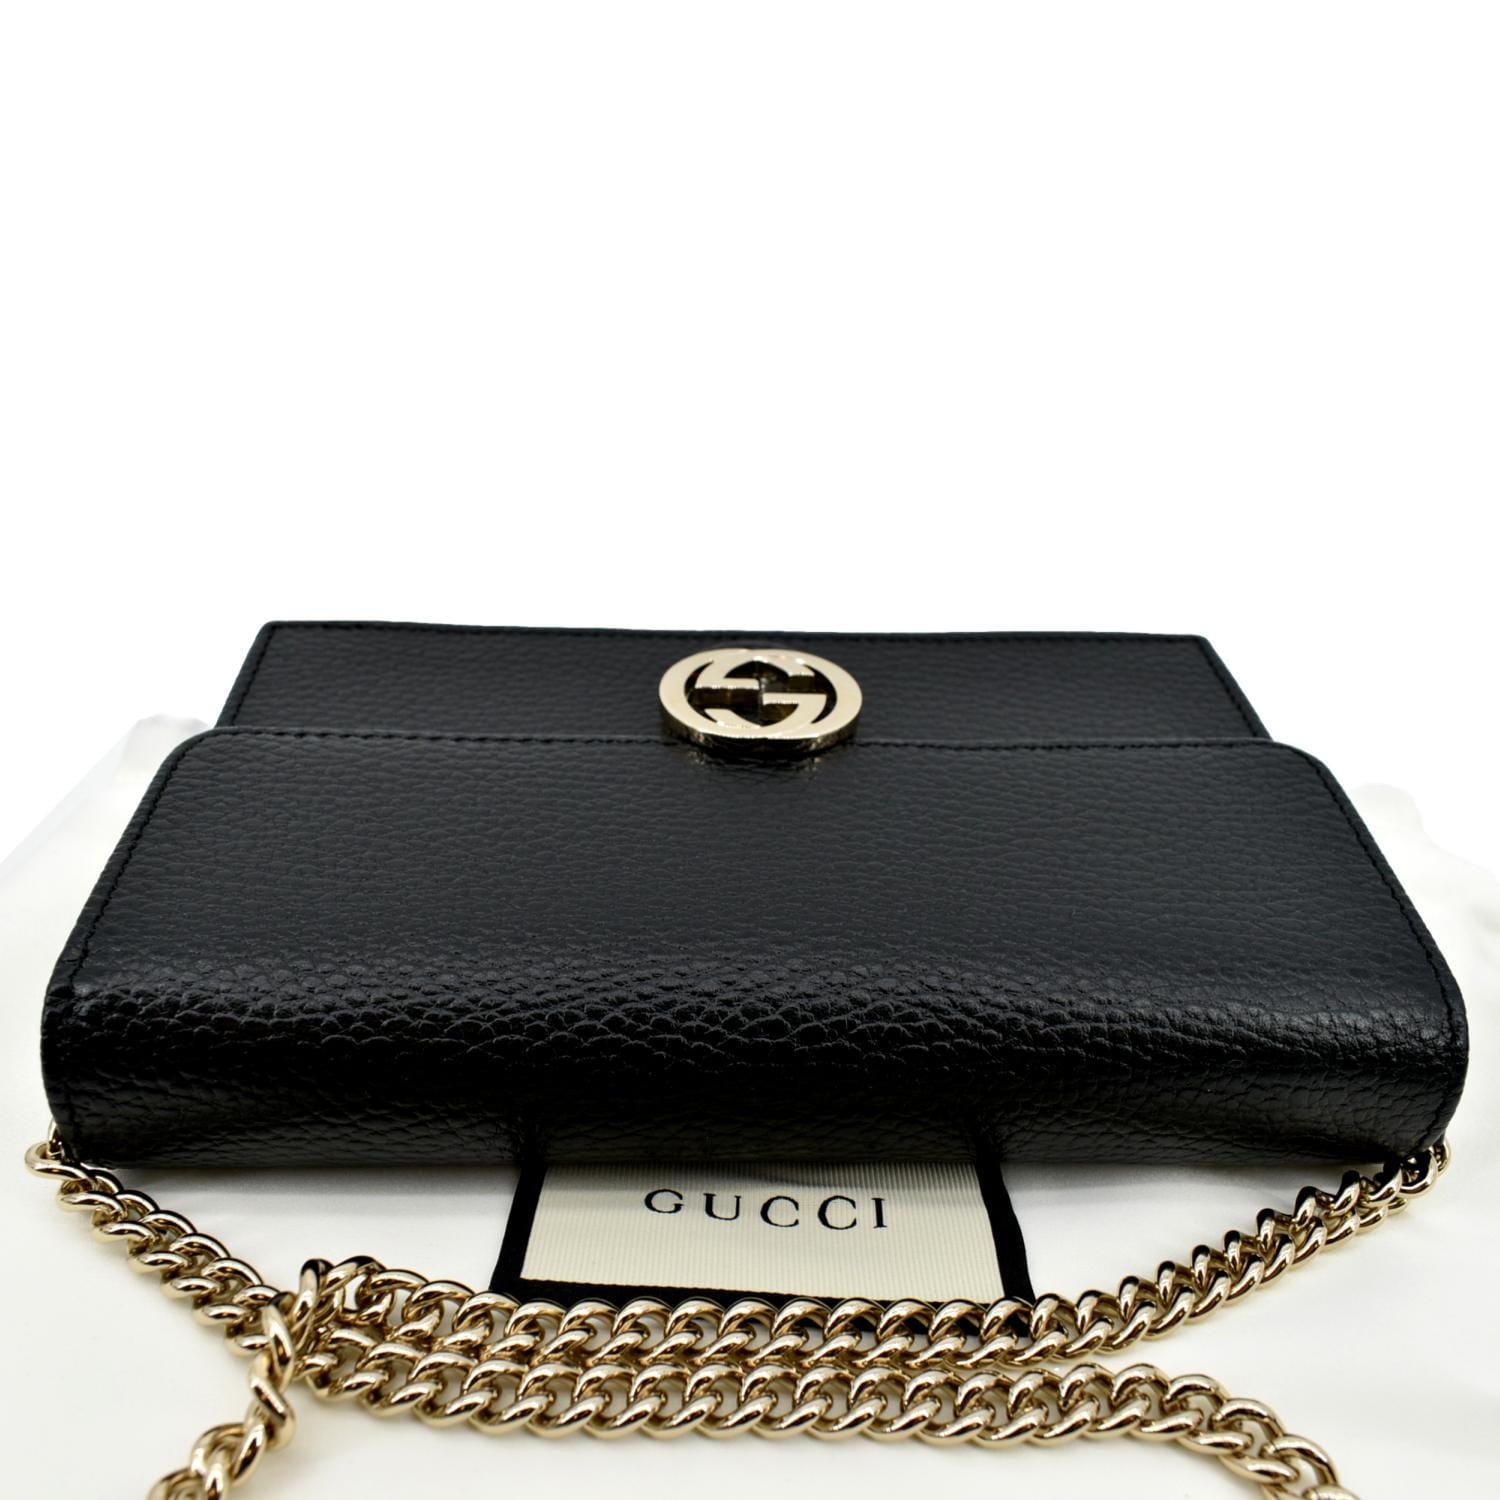 Gucci interlocking logo chain bag black